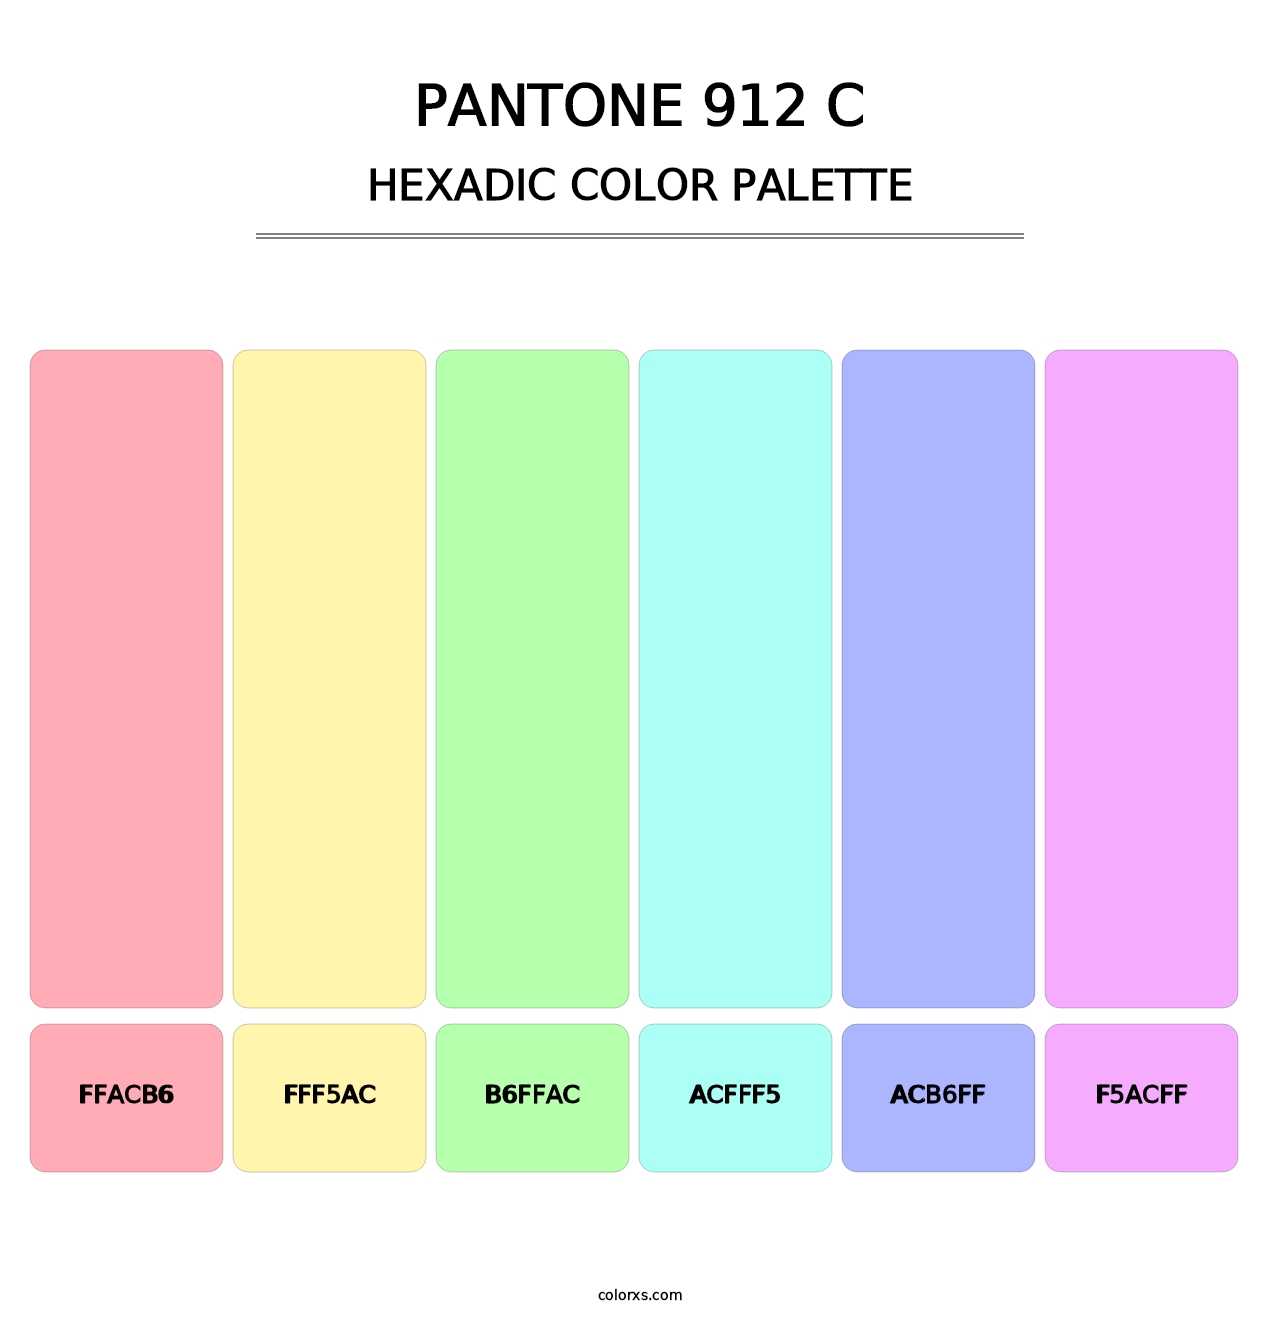 PANTONE 912 C - Hexadic Color Palette